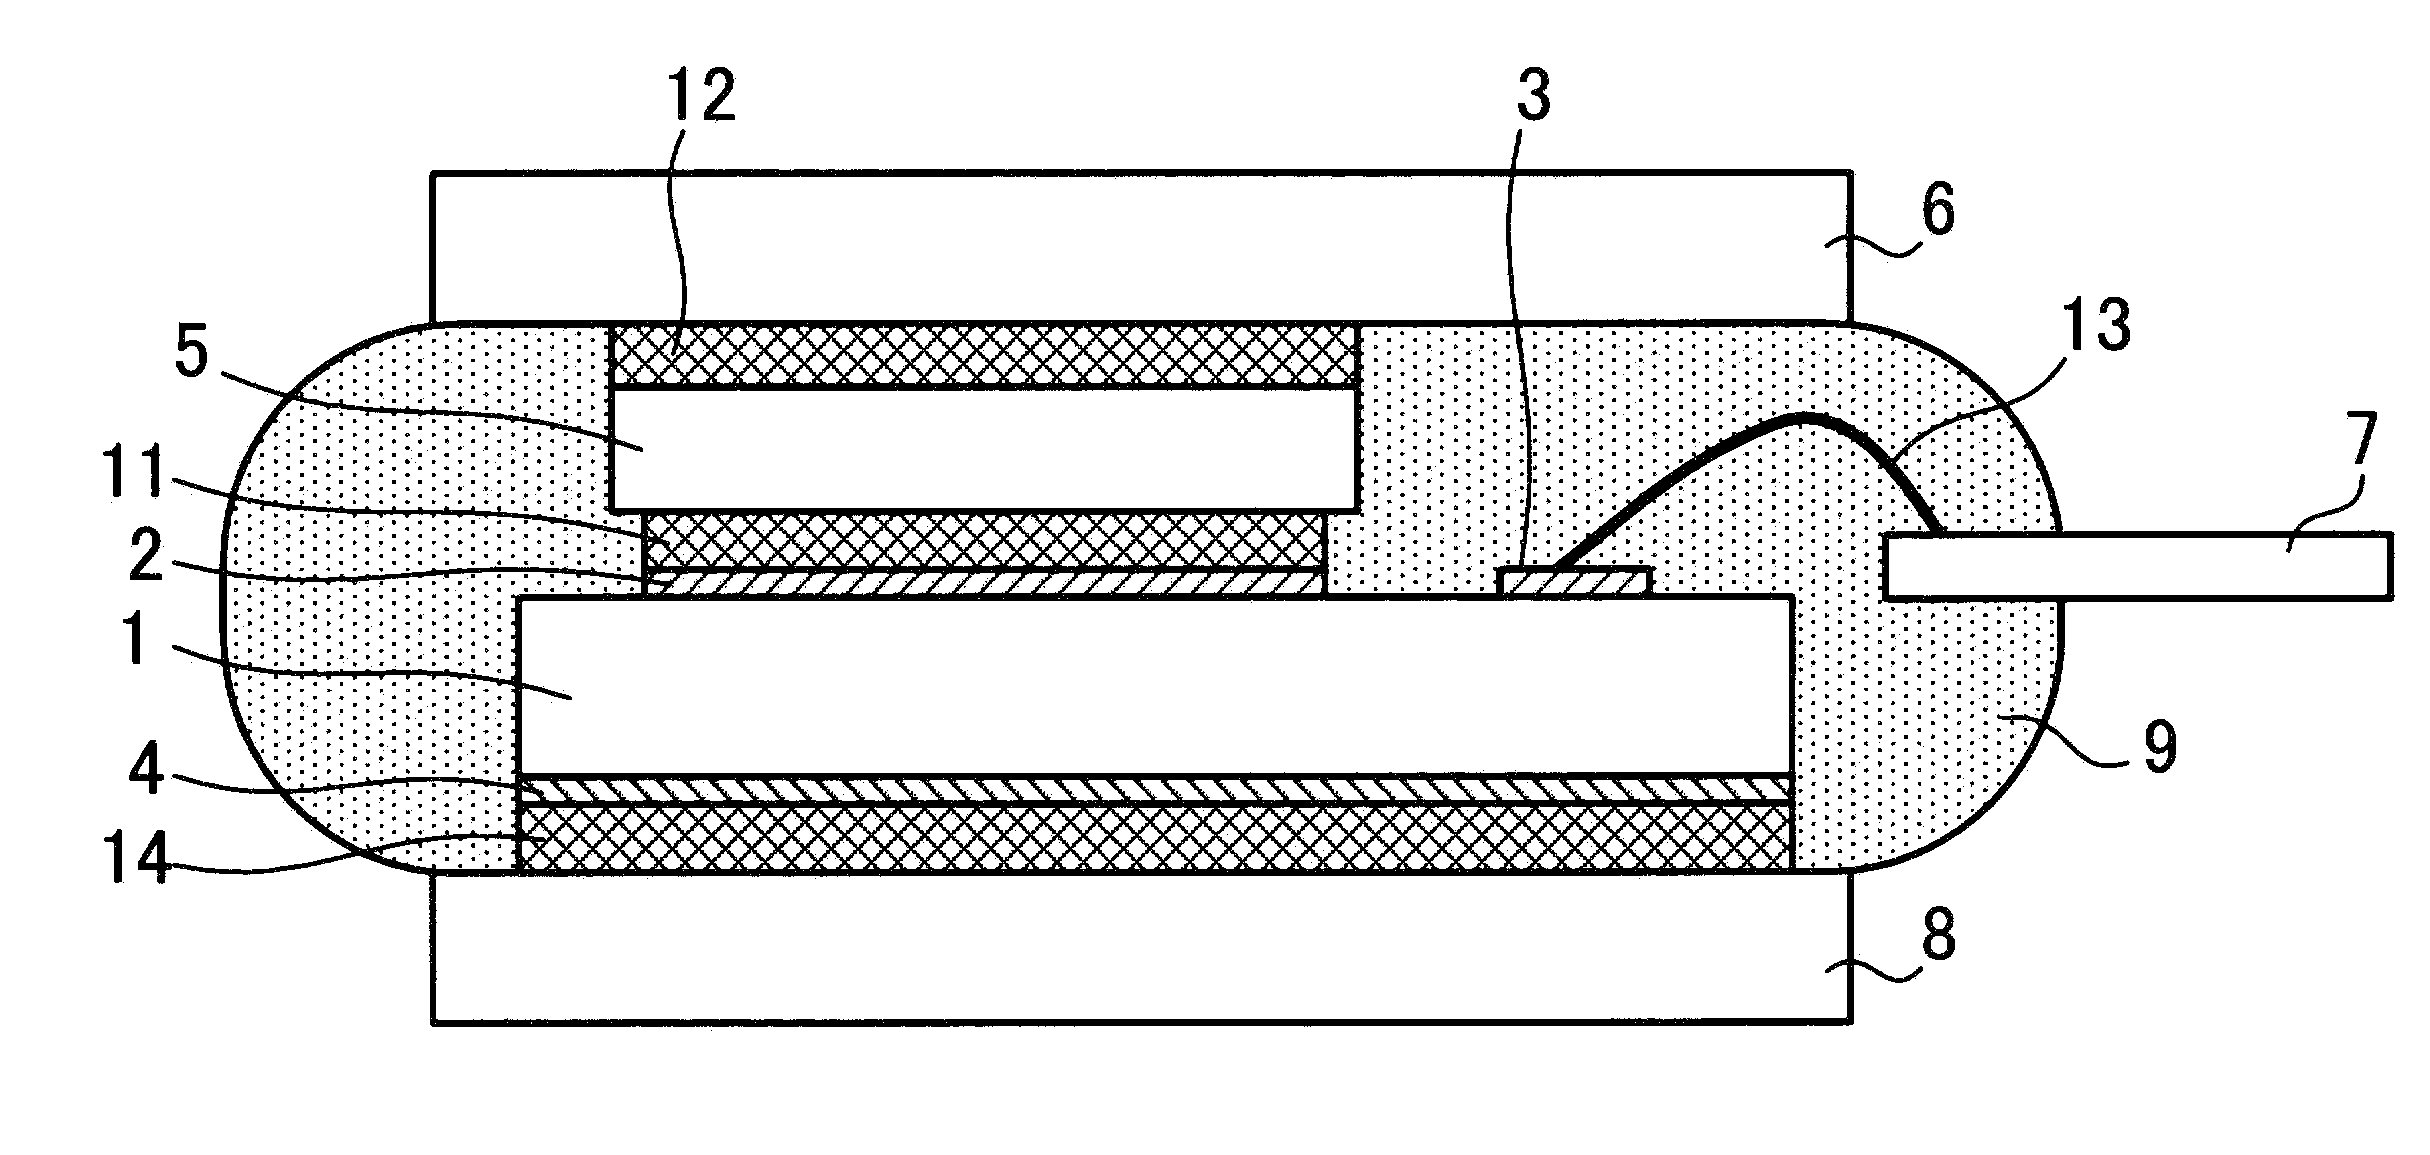 Method of manufacturing semiconductor apparatus